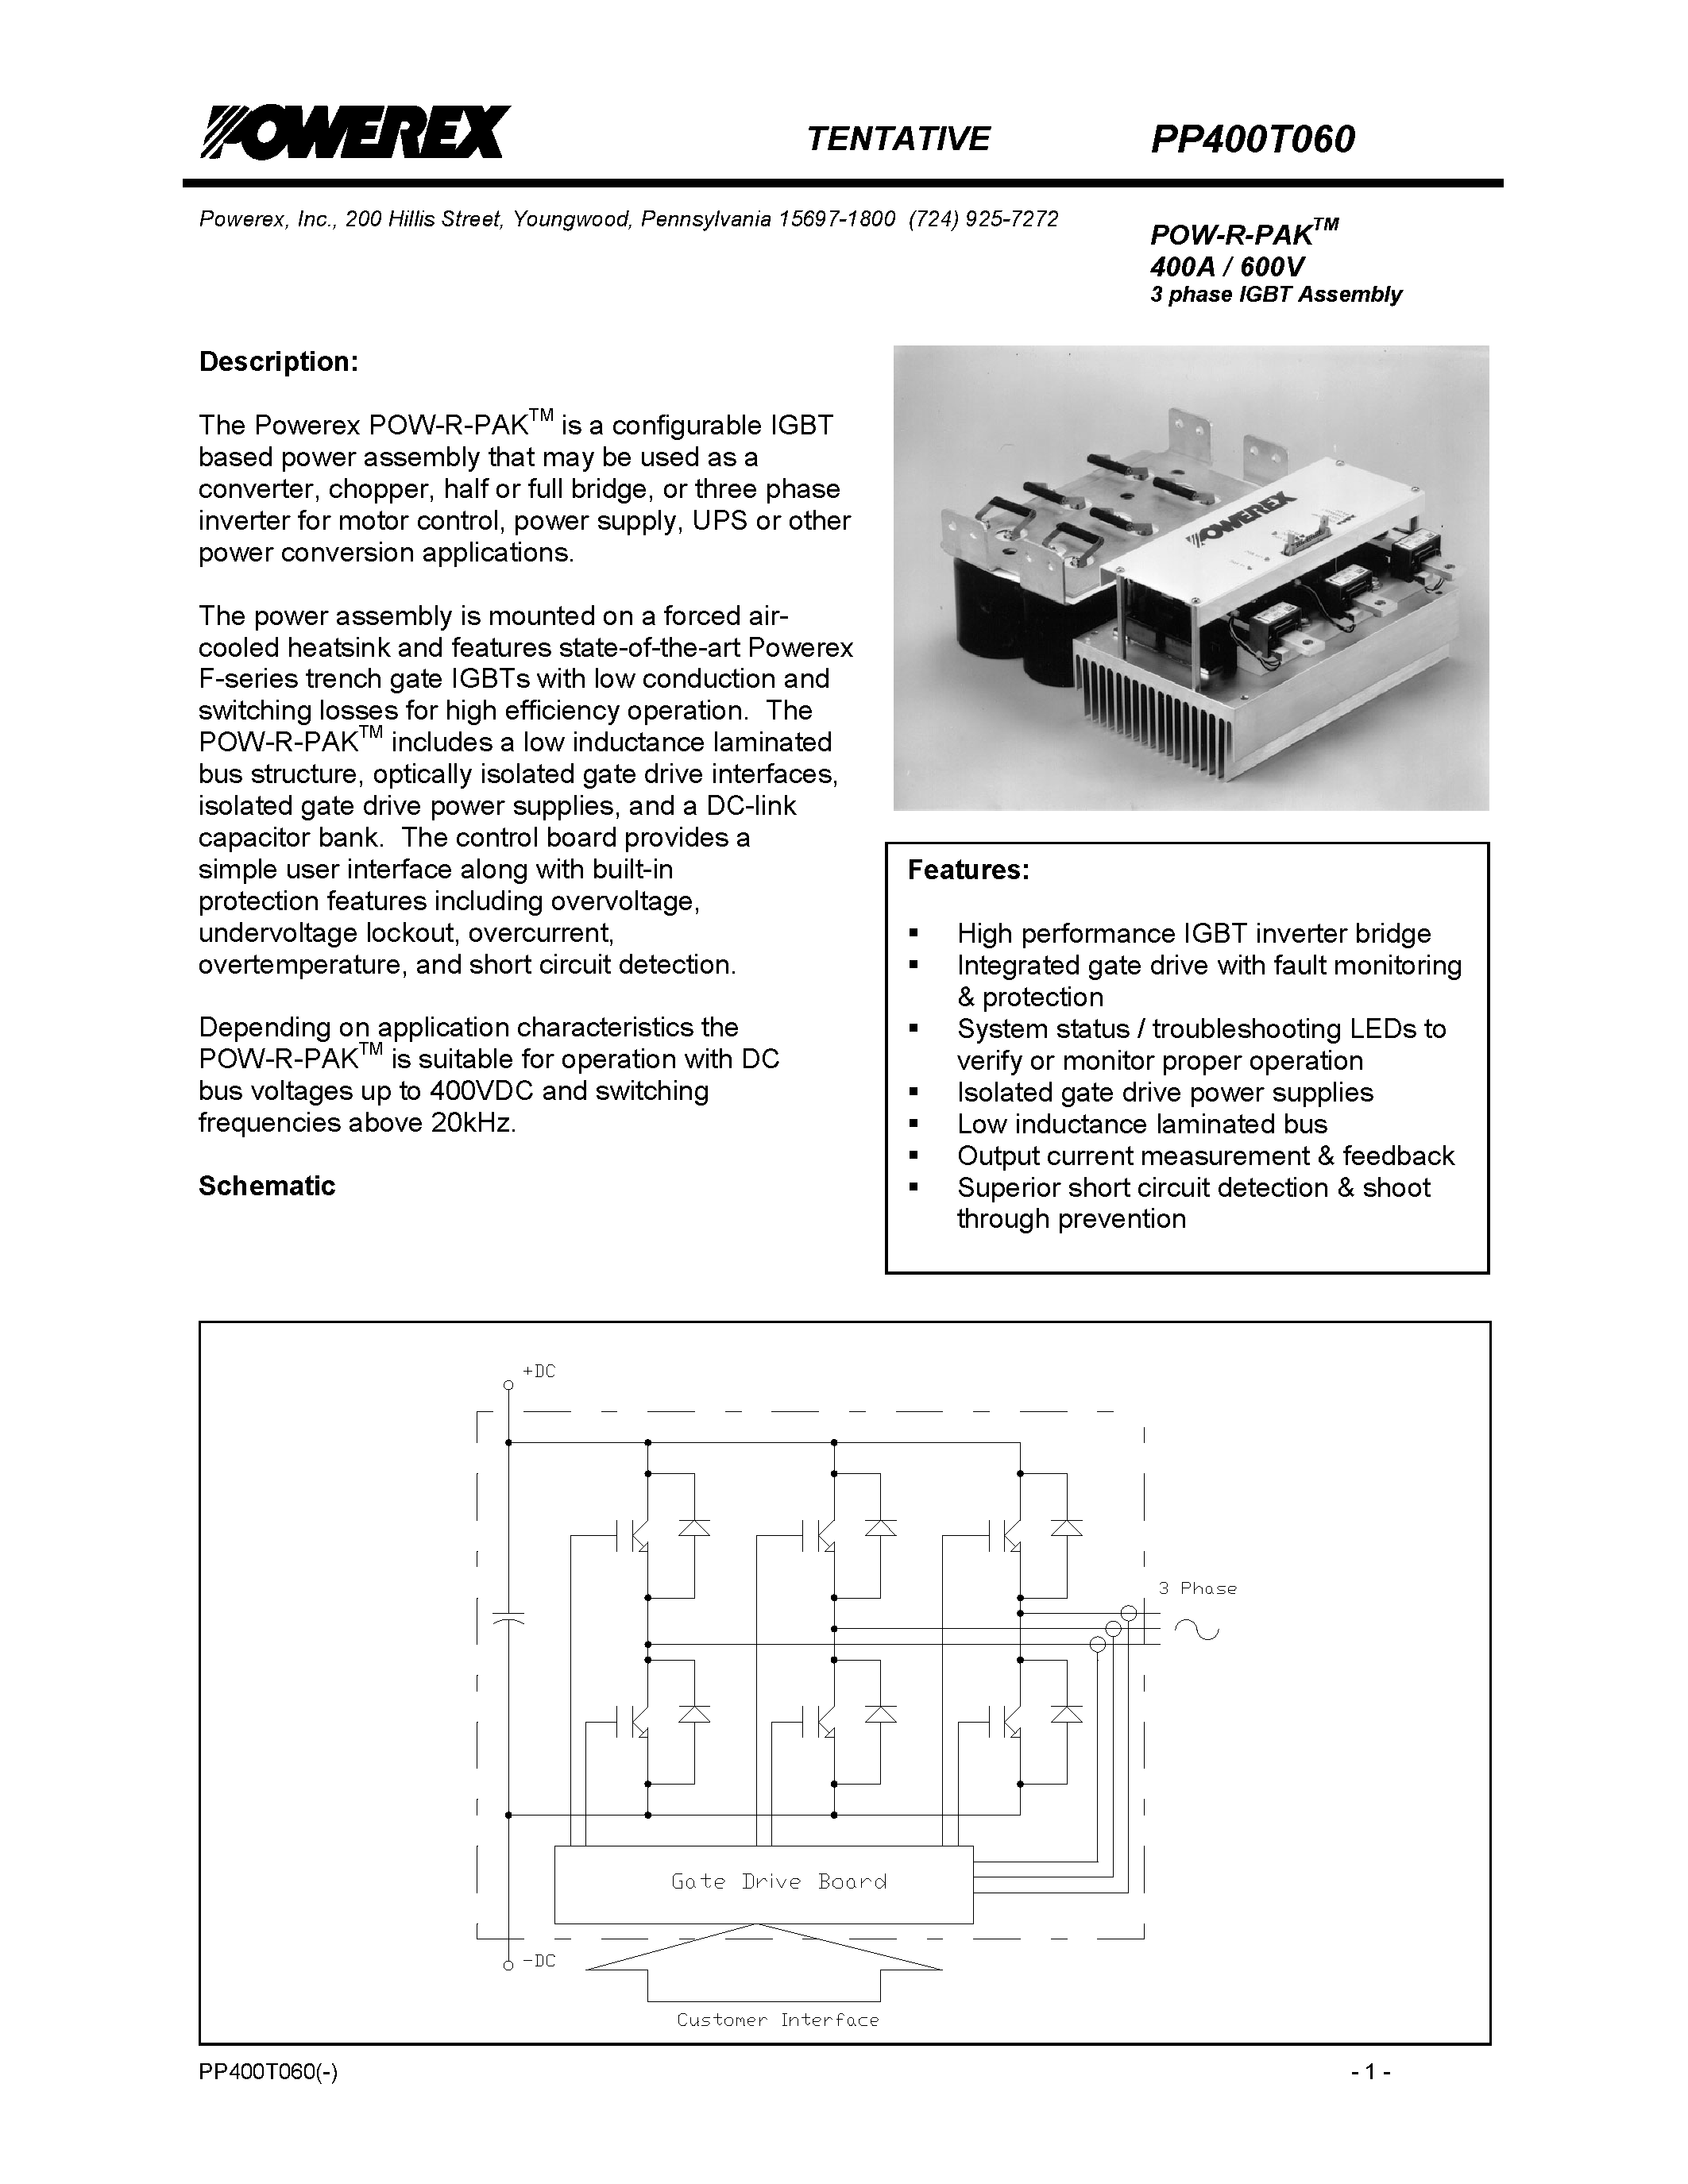 Datasheet PP400T060 - POW-R-PAK 400A / 600V 3 phase IGBT Assembly page 1